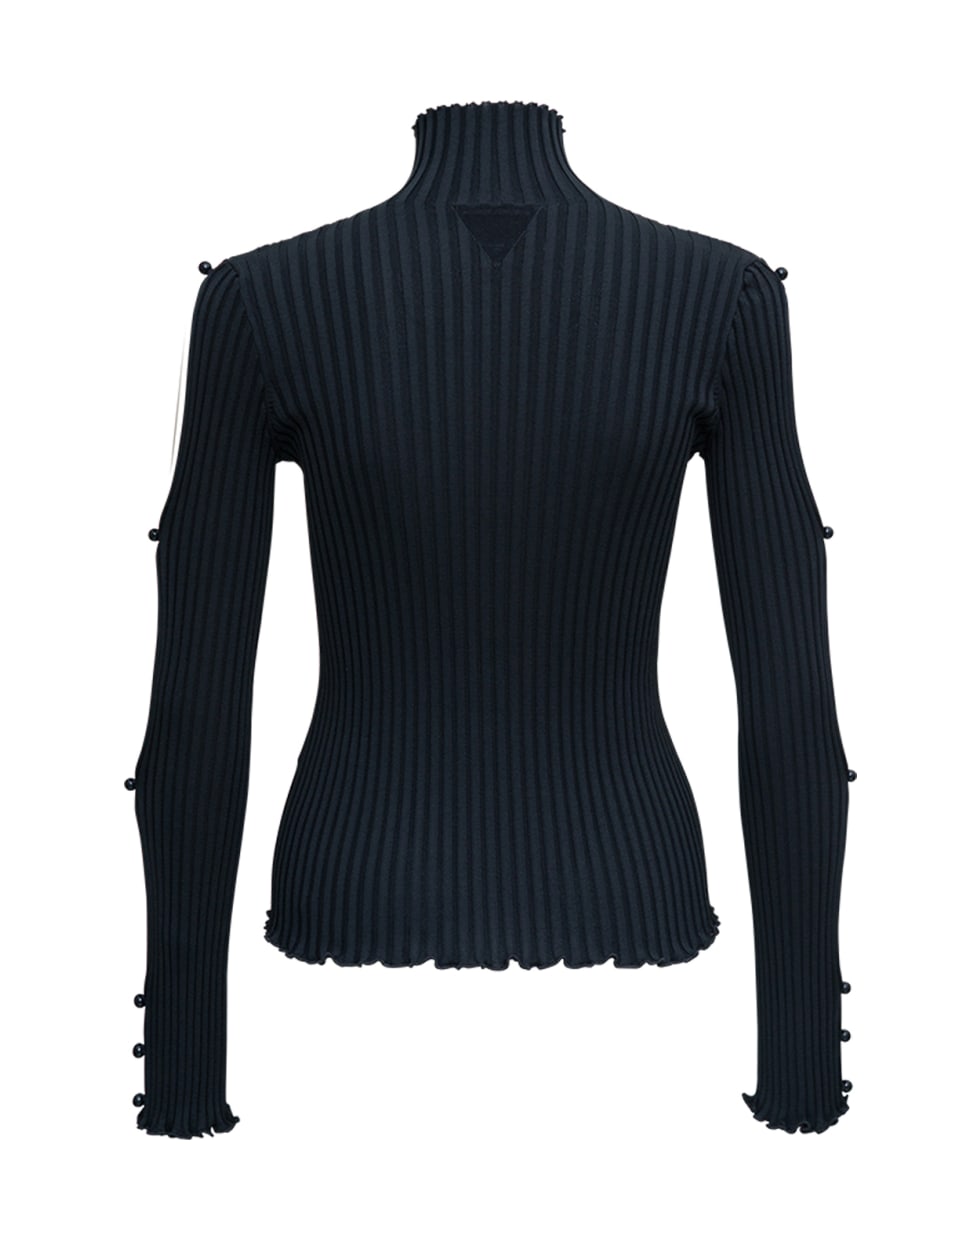 Bottega Veneta Long Sleeve Shirt With Cut Out Details - Black